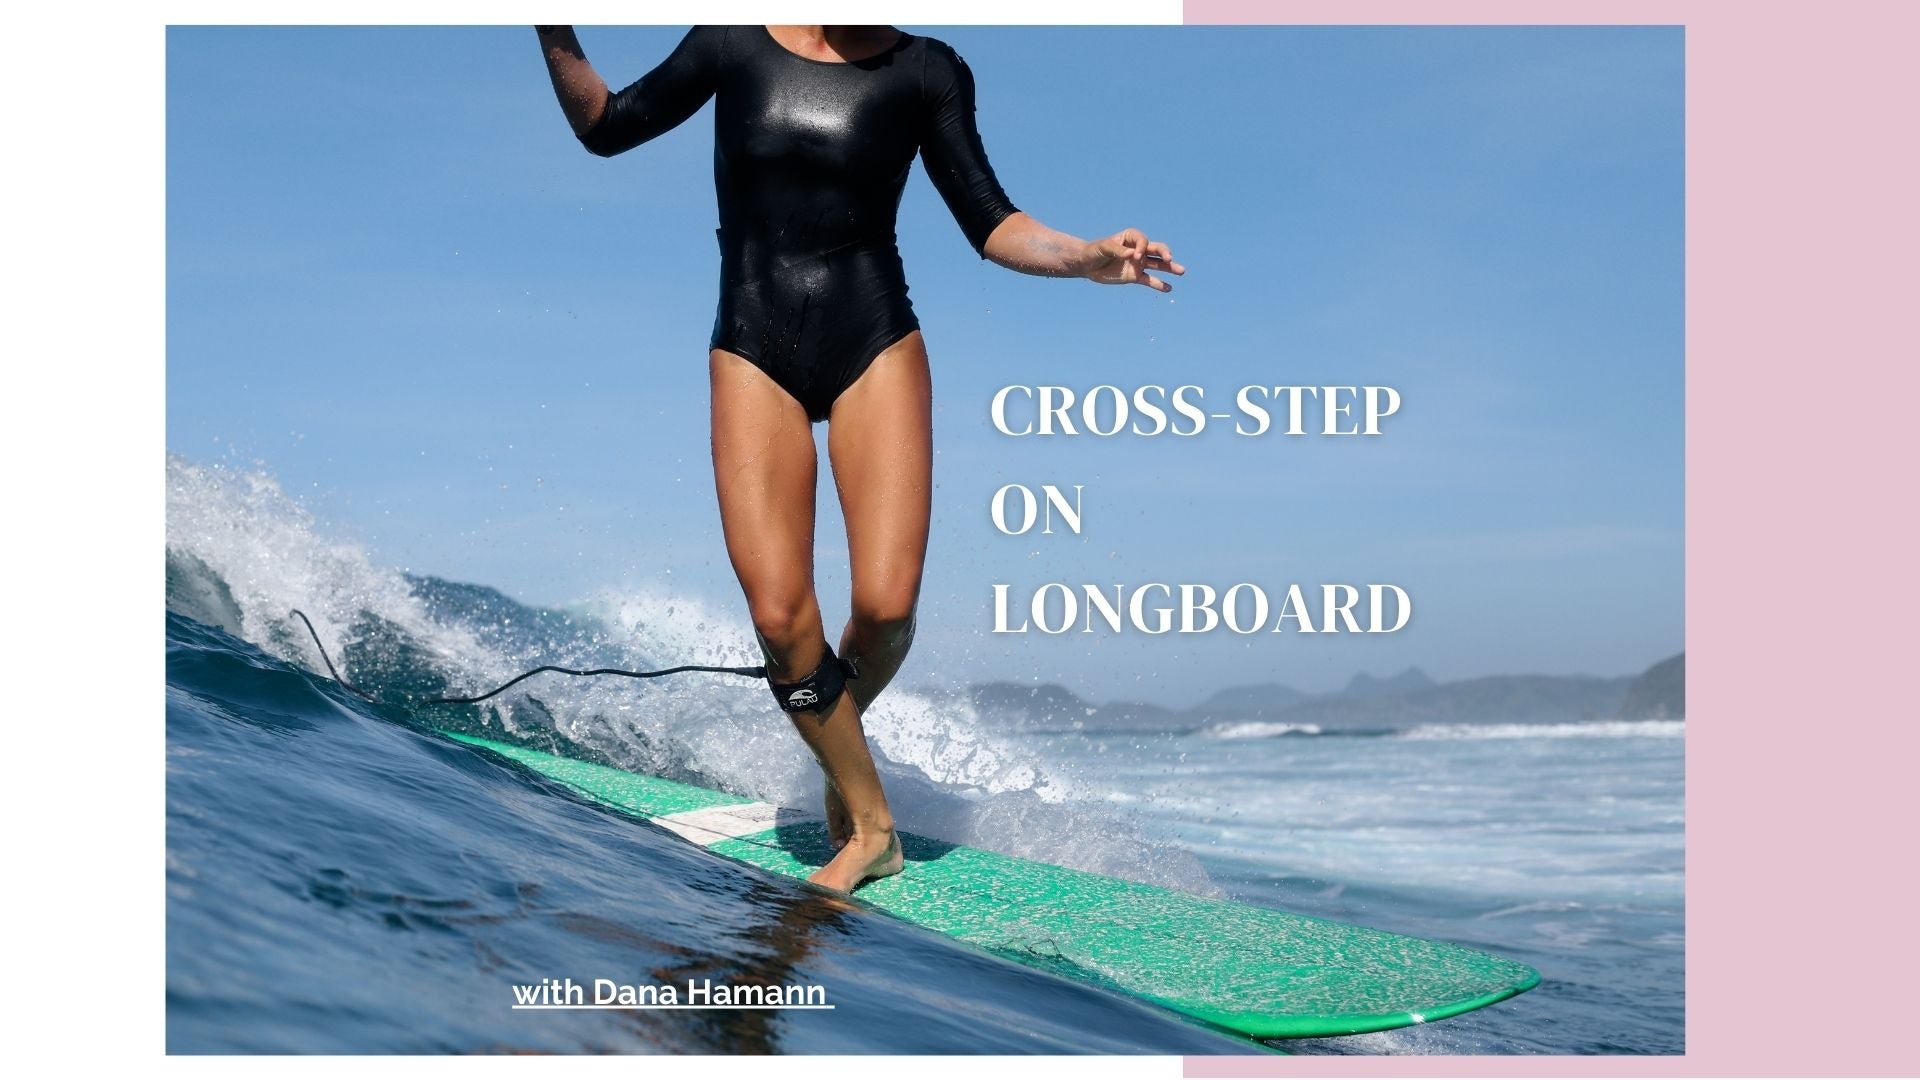 Cross-stepping Guide for Longboarders